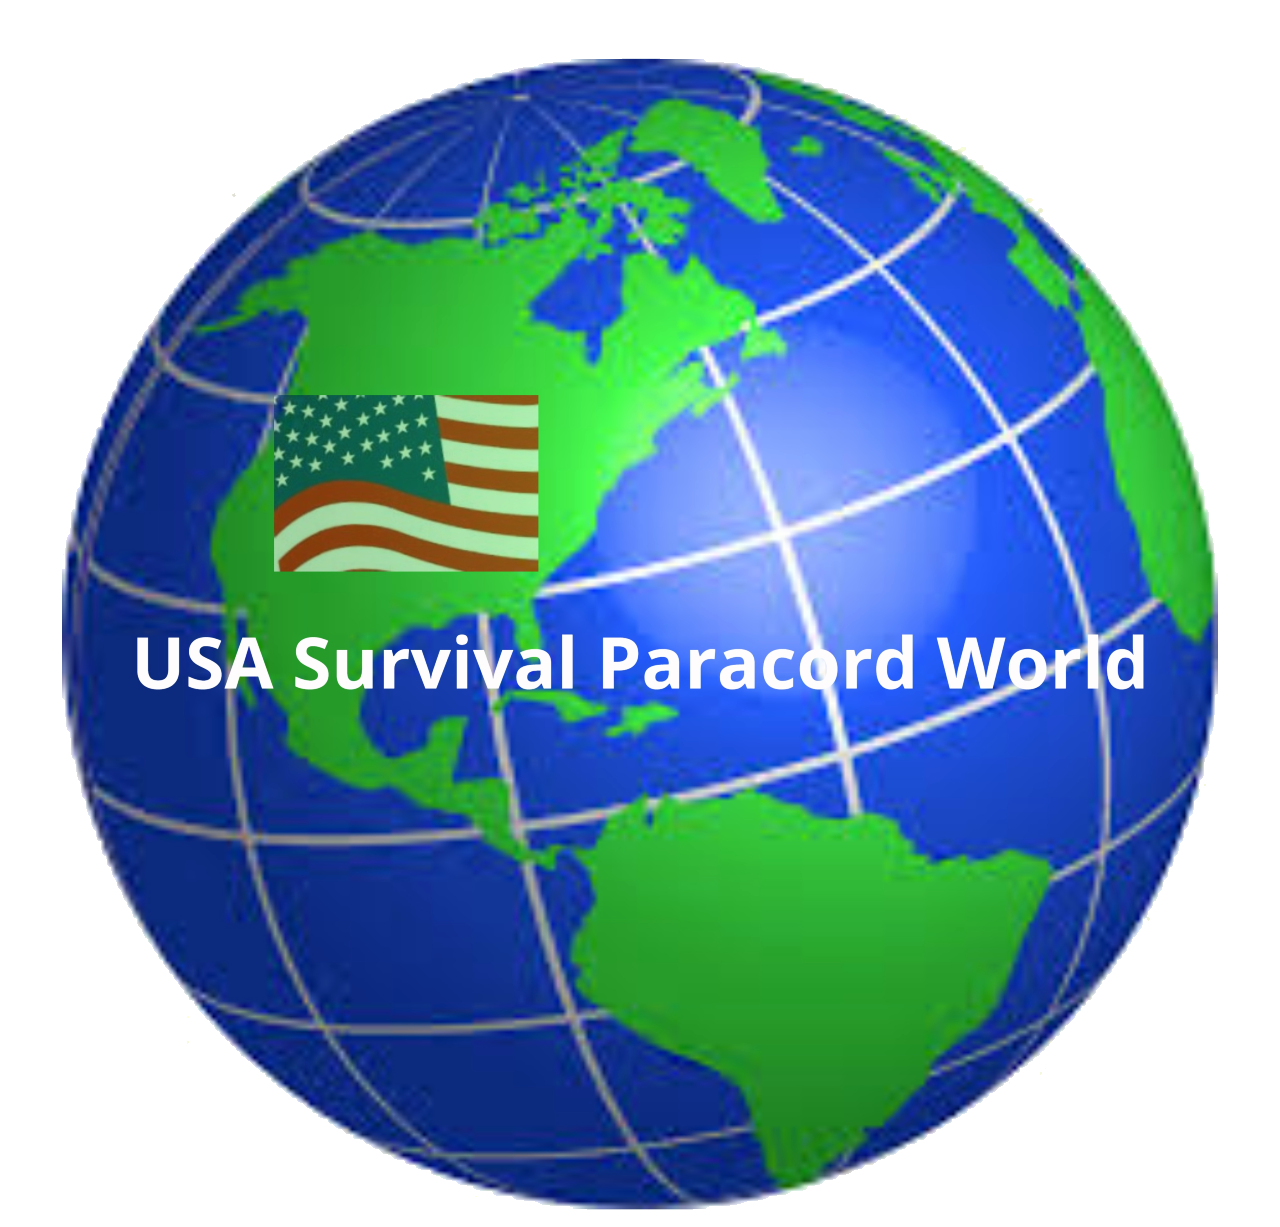 USA SURVIVAL PARACORD WORLD